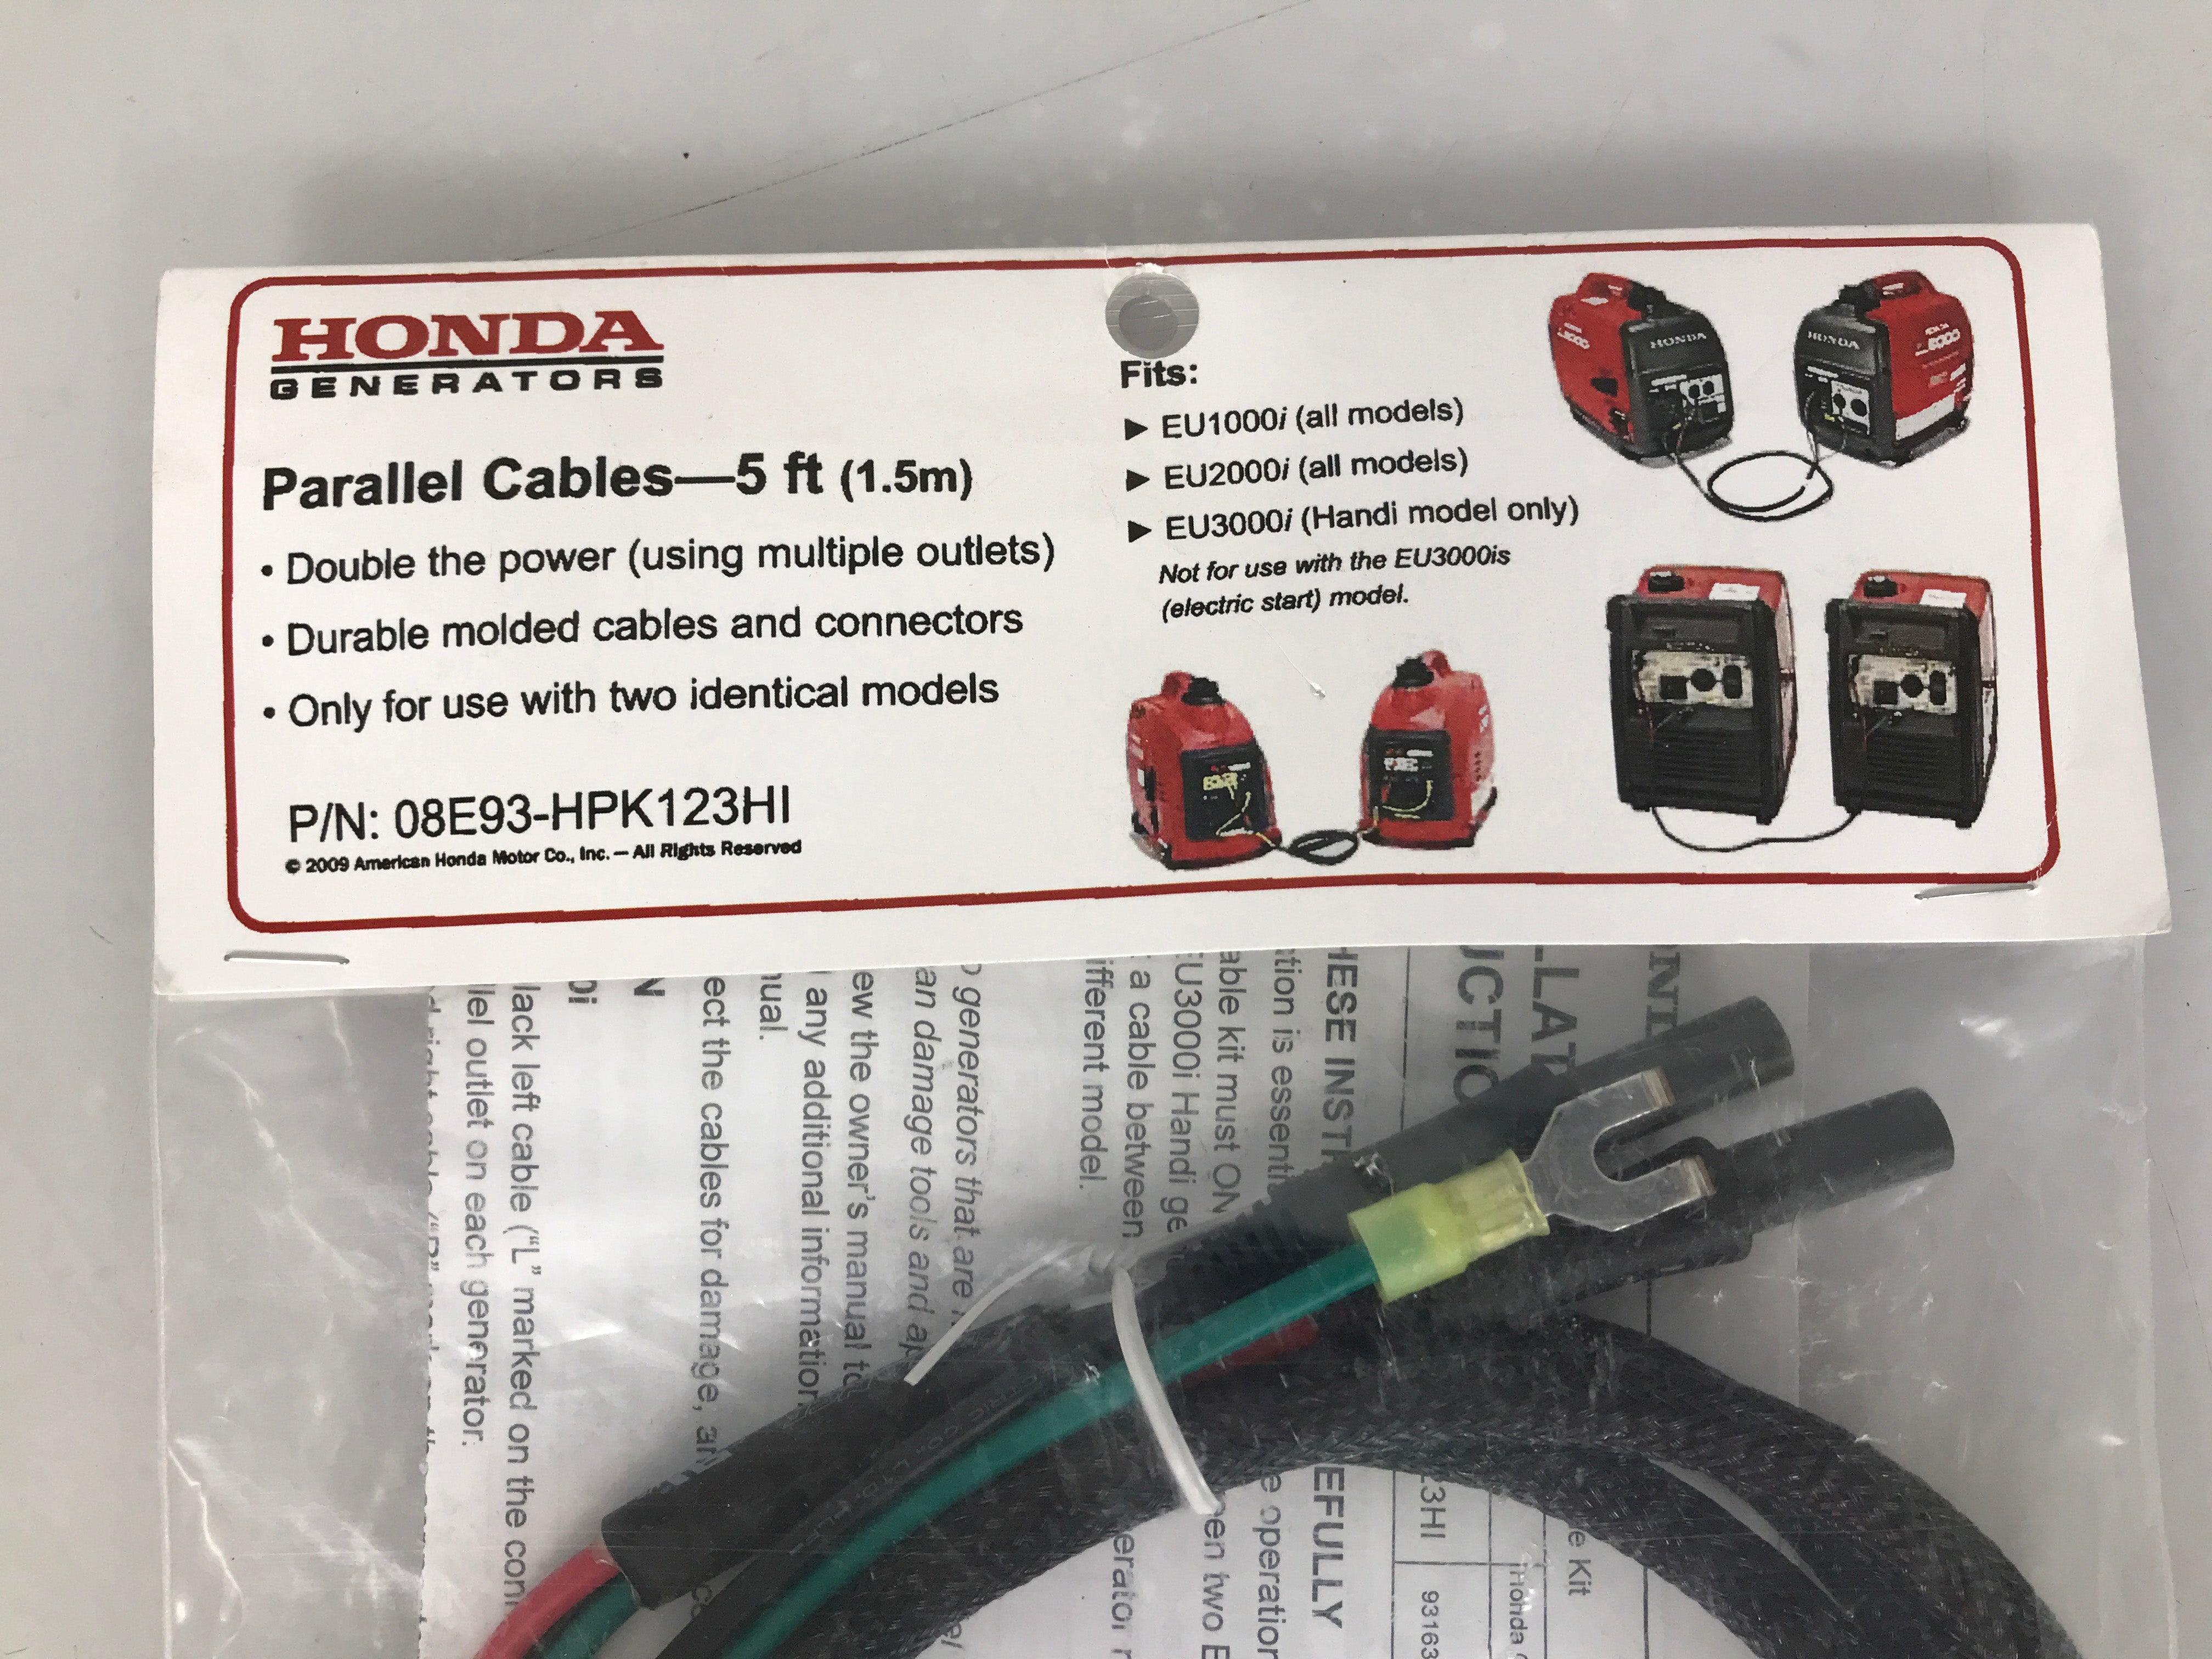 Genuine Honda 5 ft Parallel Cable Kit for Honda Generators *New in Package*